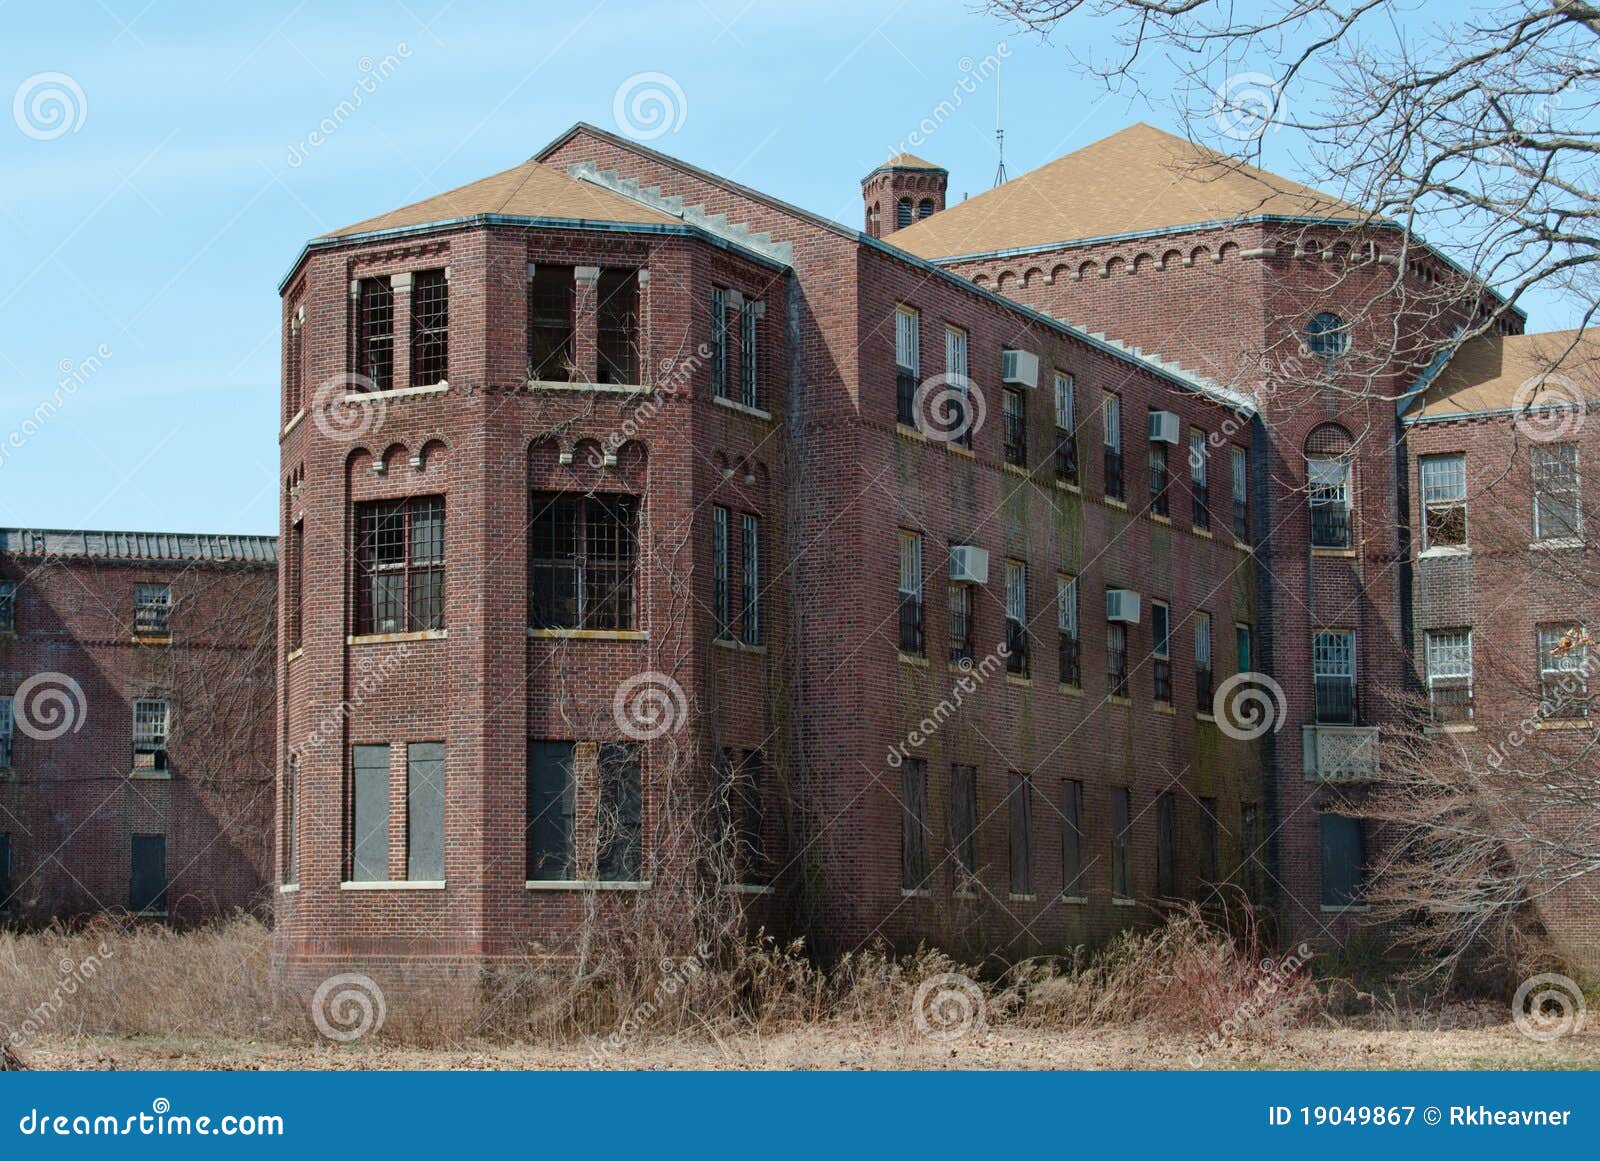 abandoned psychiatric hospital